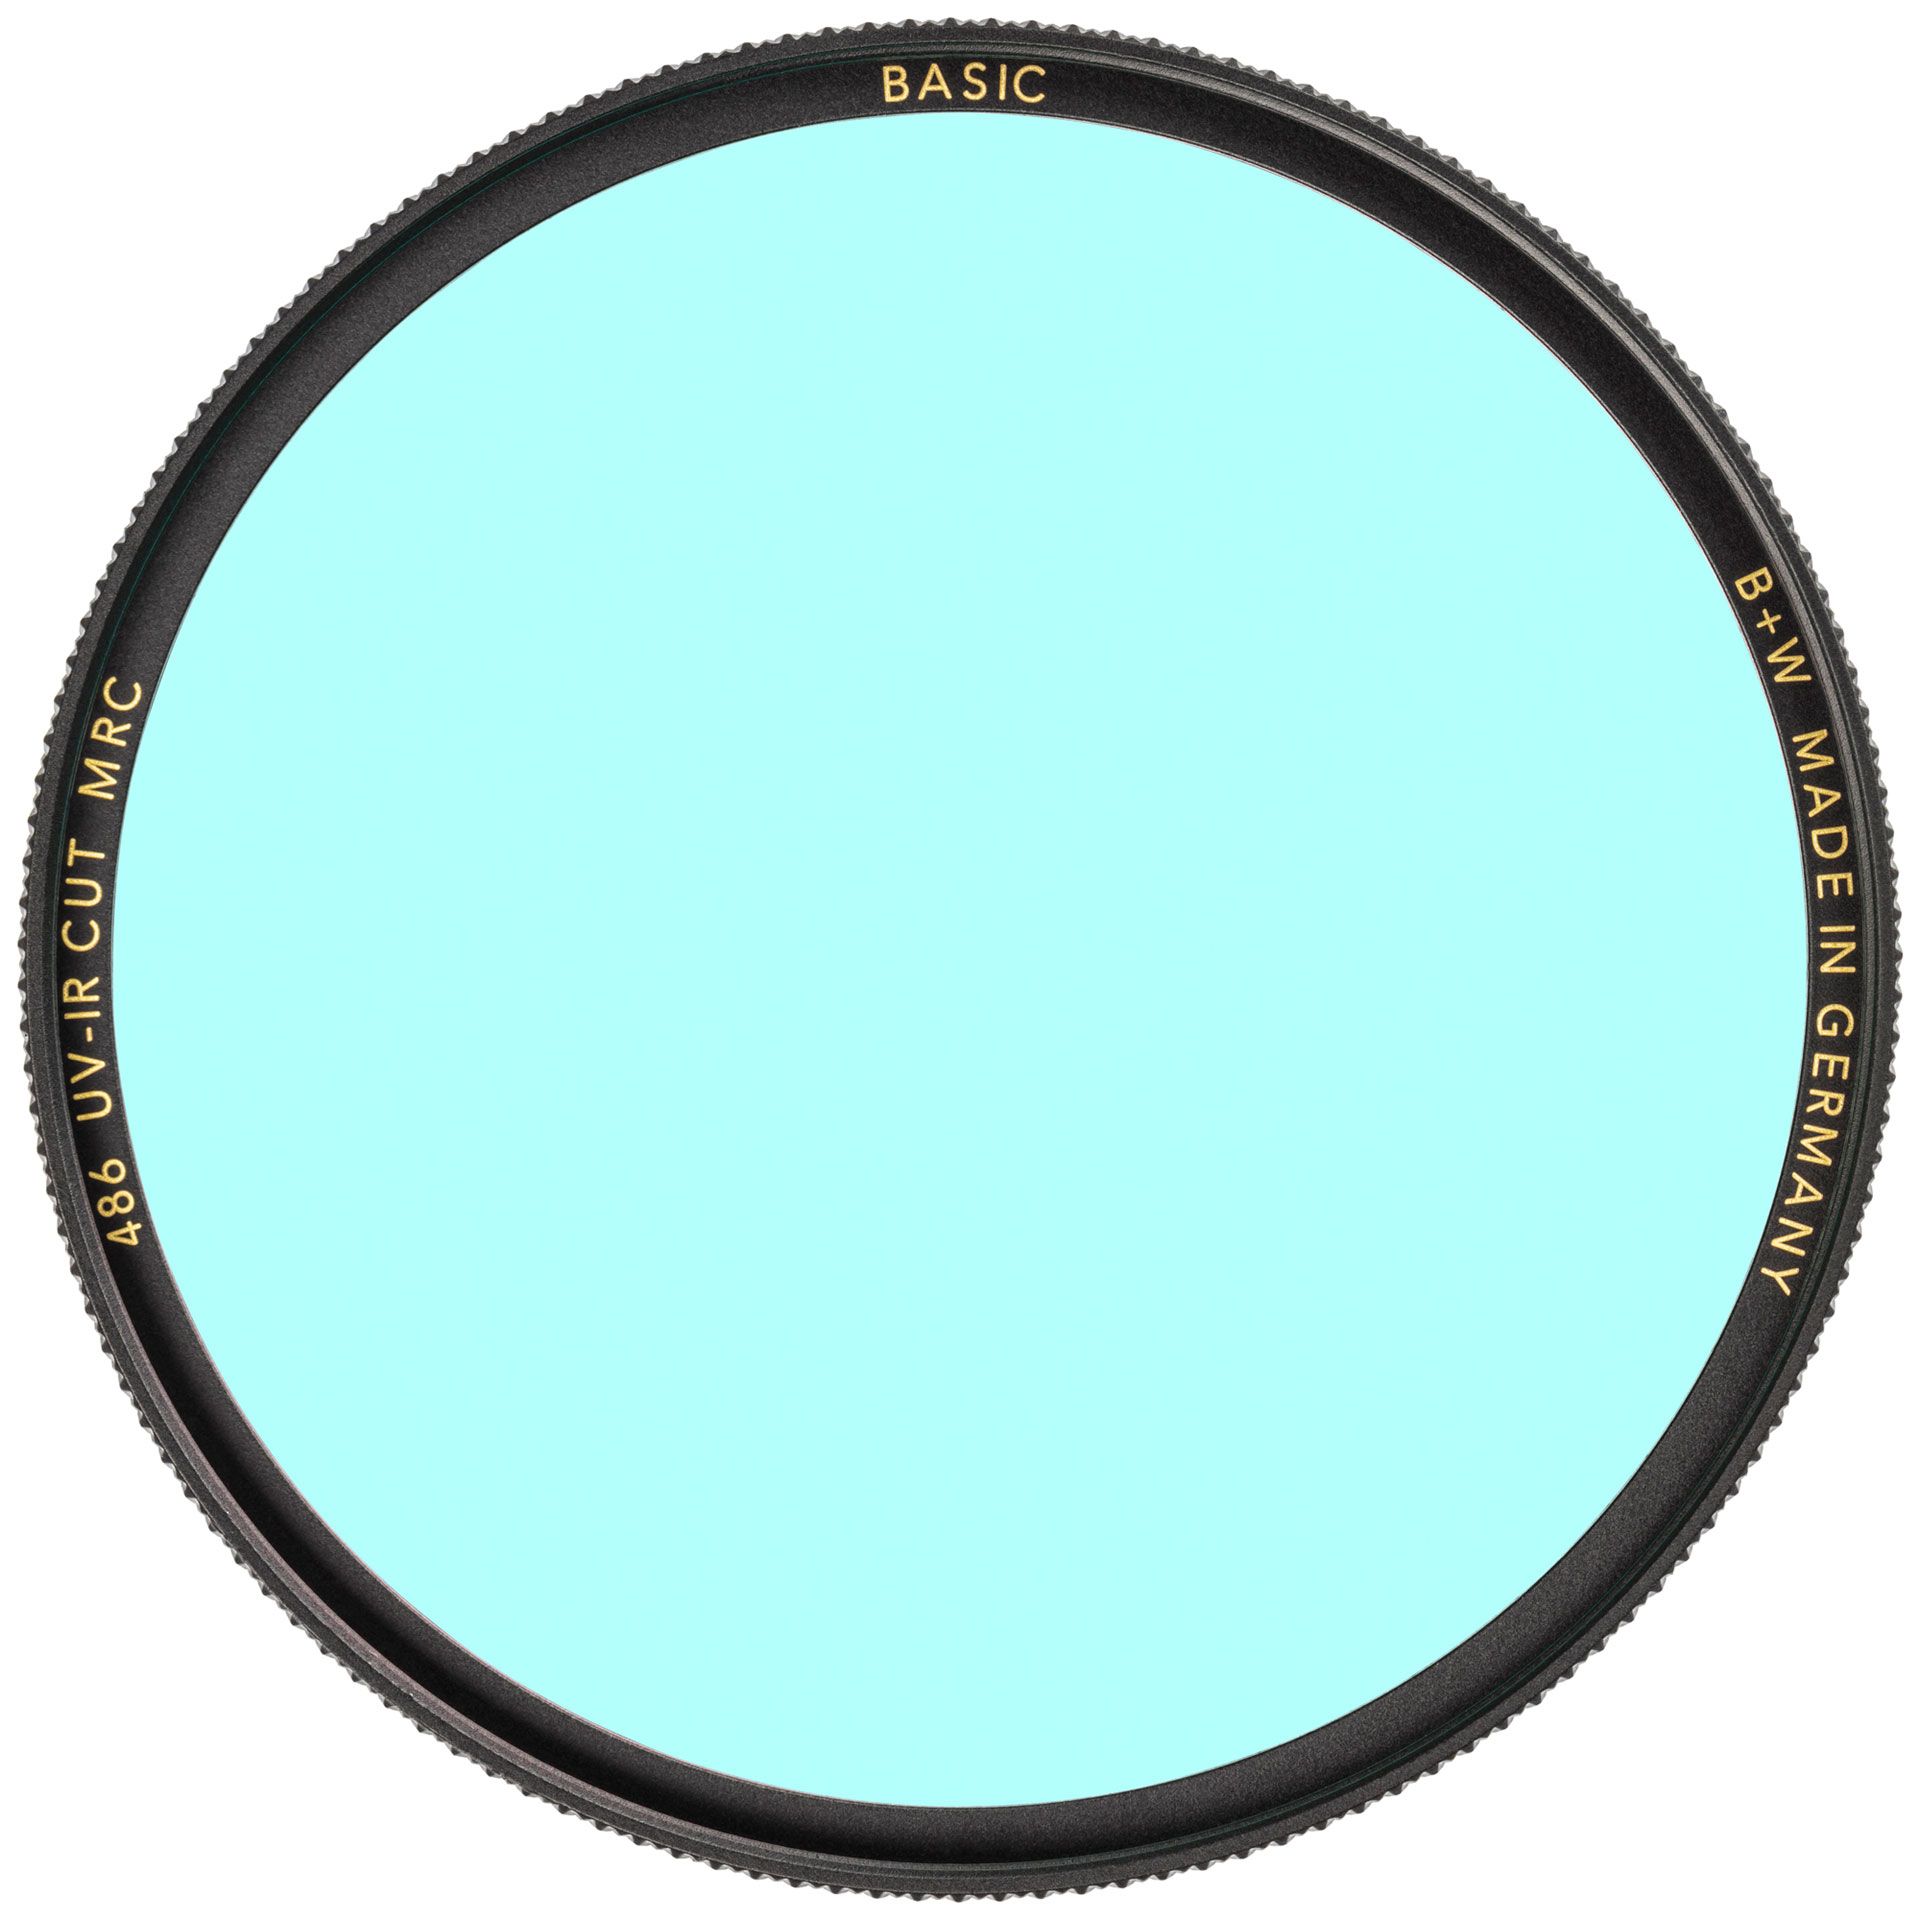 B+W Filter - Product - Basic - Front - 486_MRC_UV-IR-Cut.jpg